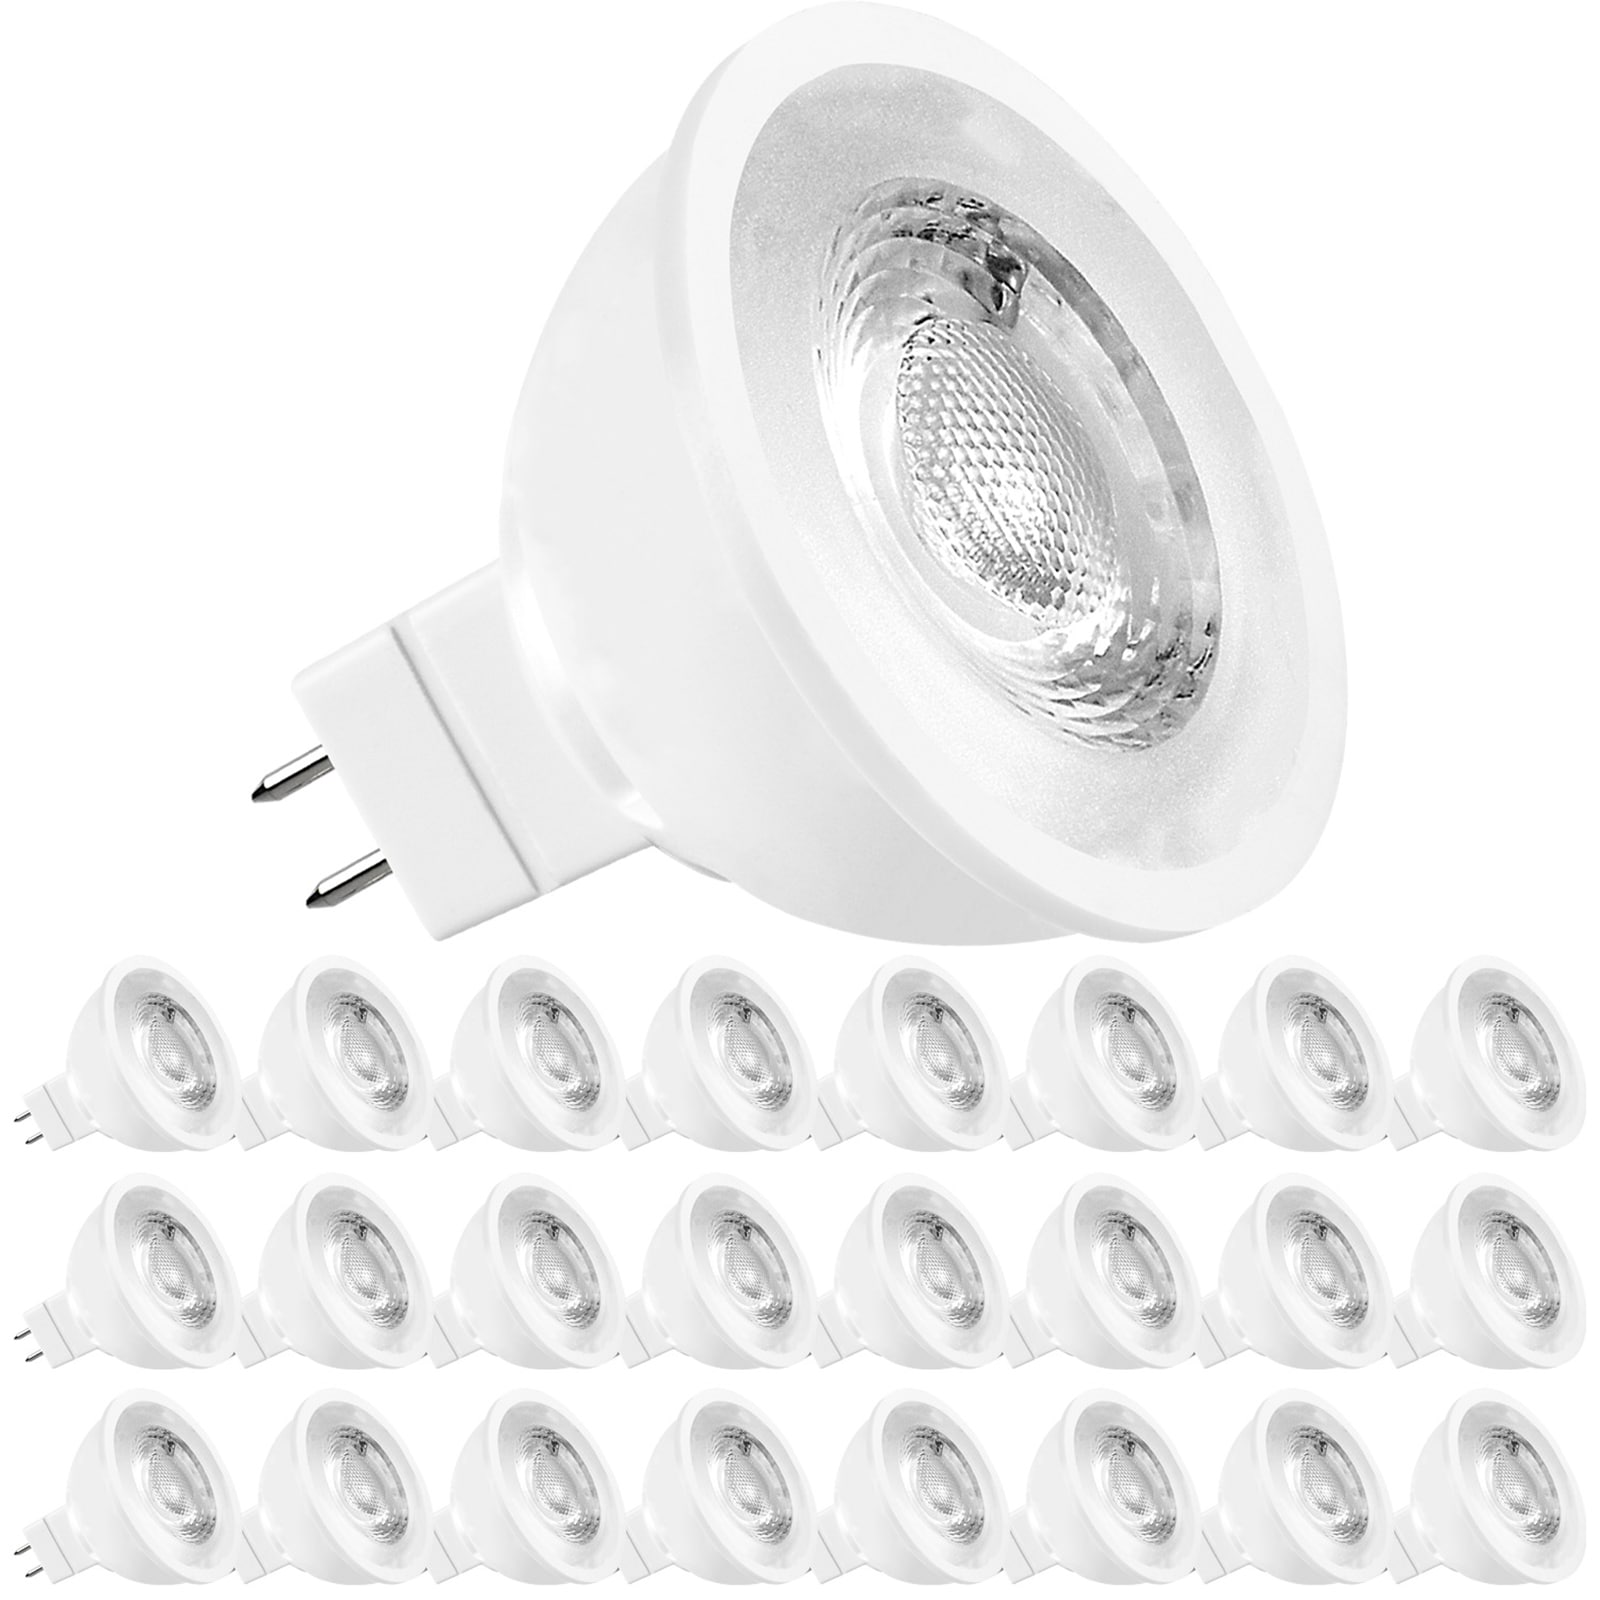 GE Classic 50-Watt EQ MR16 Warm White Gu5.3 Dimmable LED Light Bulb  (3-Pack) in the Spot & Flood Light Bulbs department at